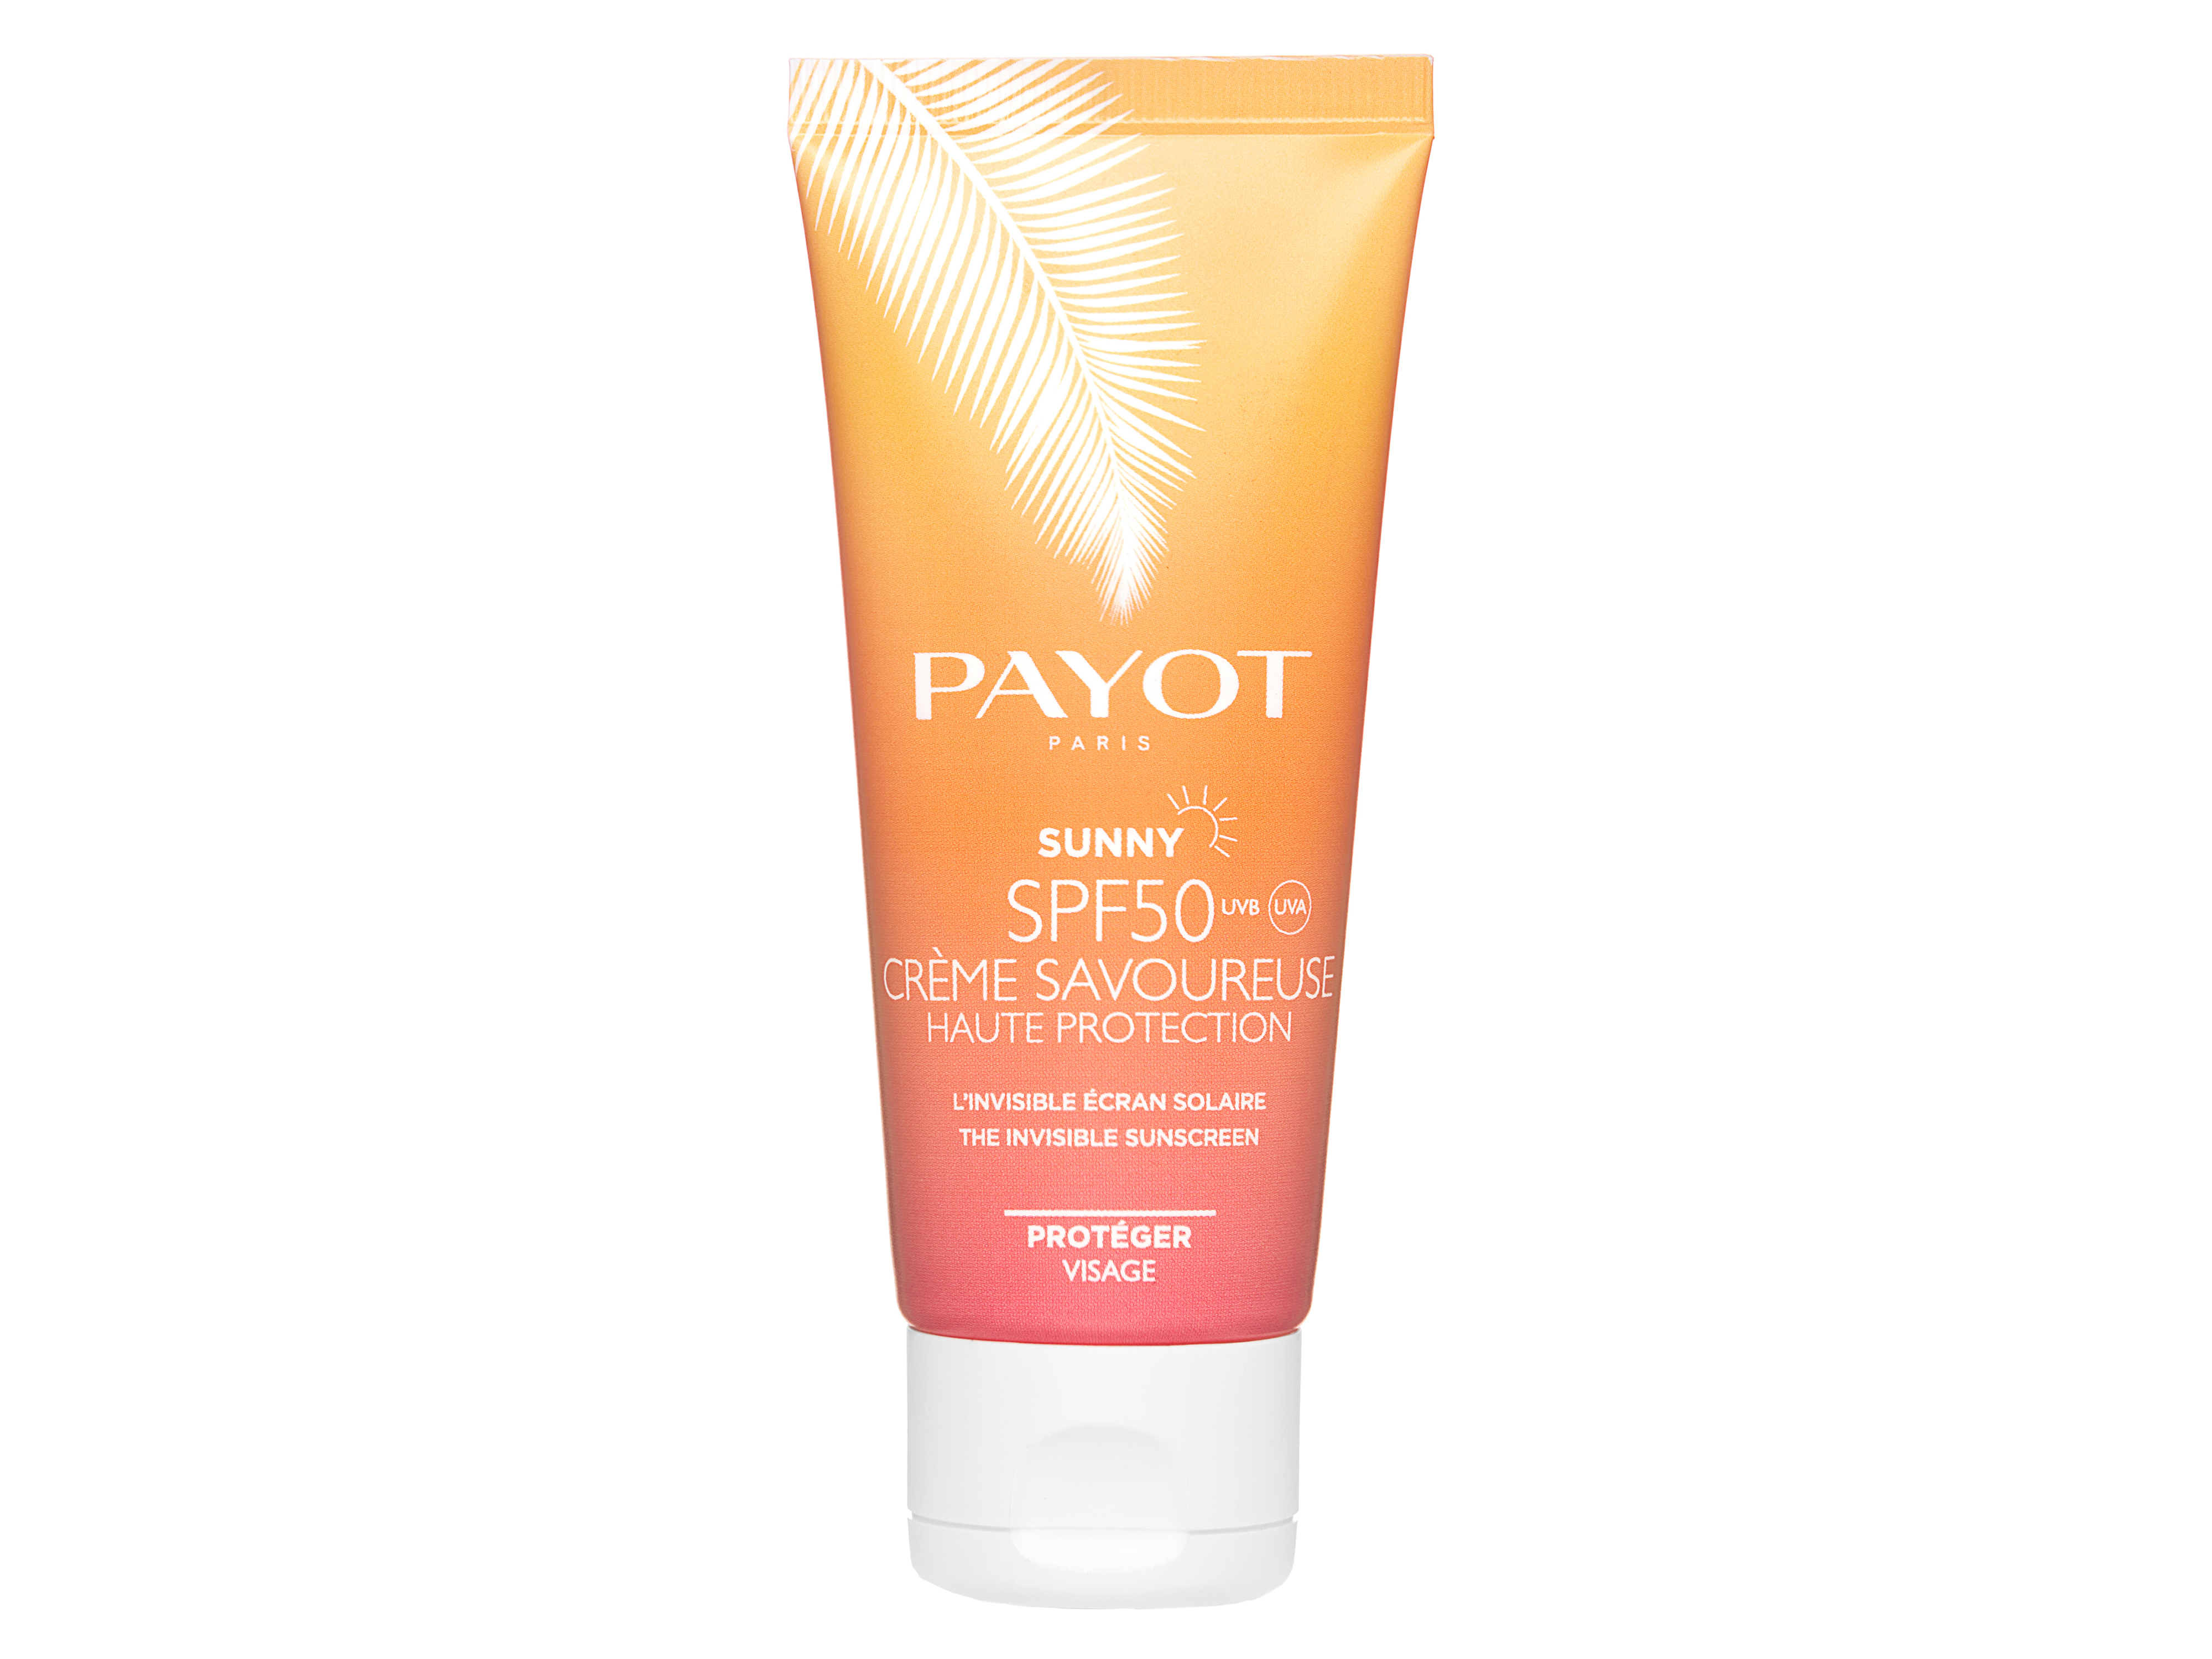 Payot Sunny Crème Savoureuse Face SPF50, 50 ml